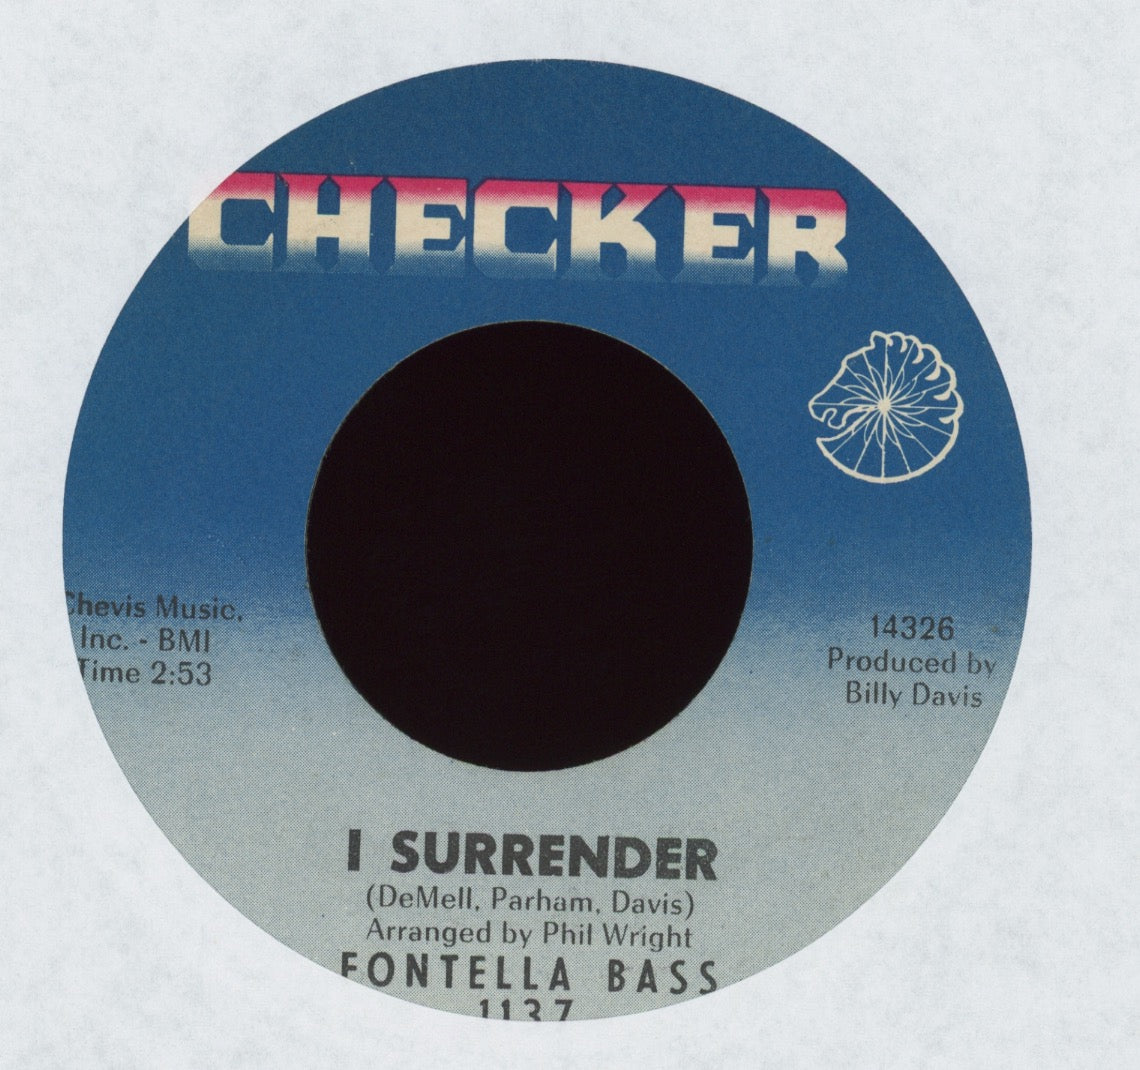 Fontella Bass - I Surrender on Checker